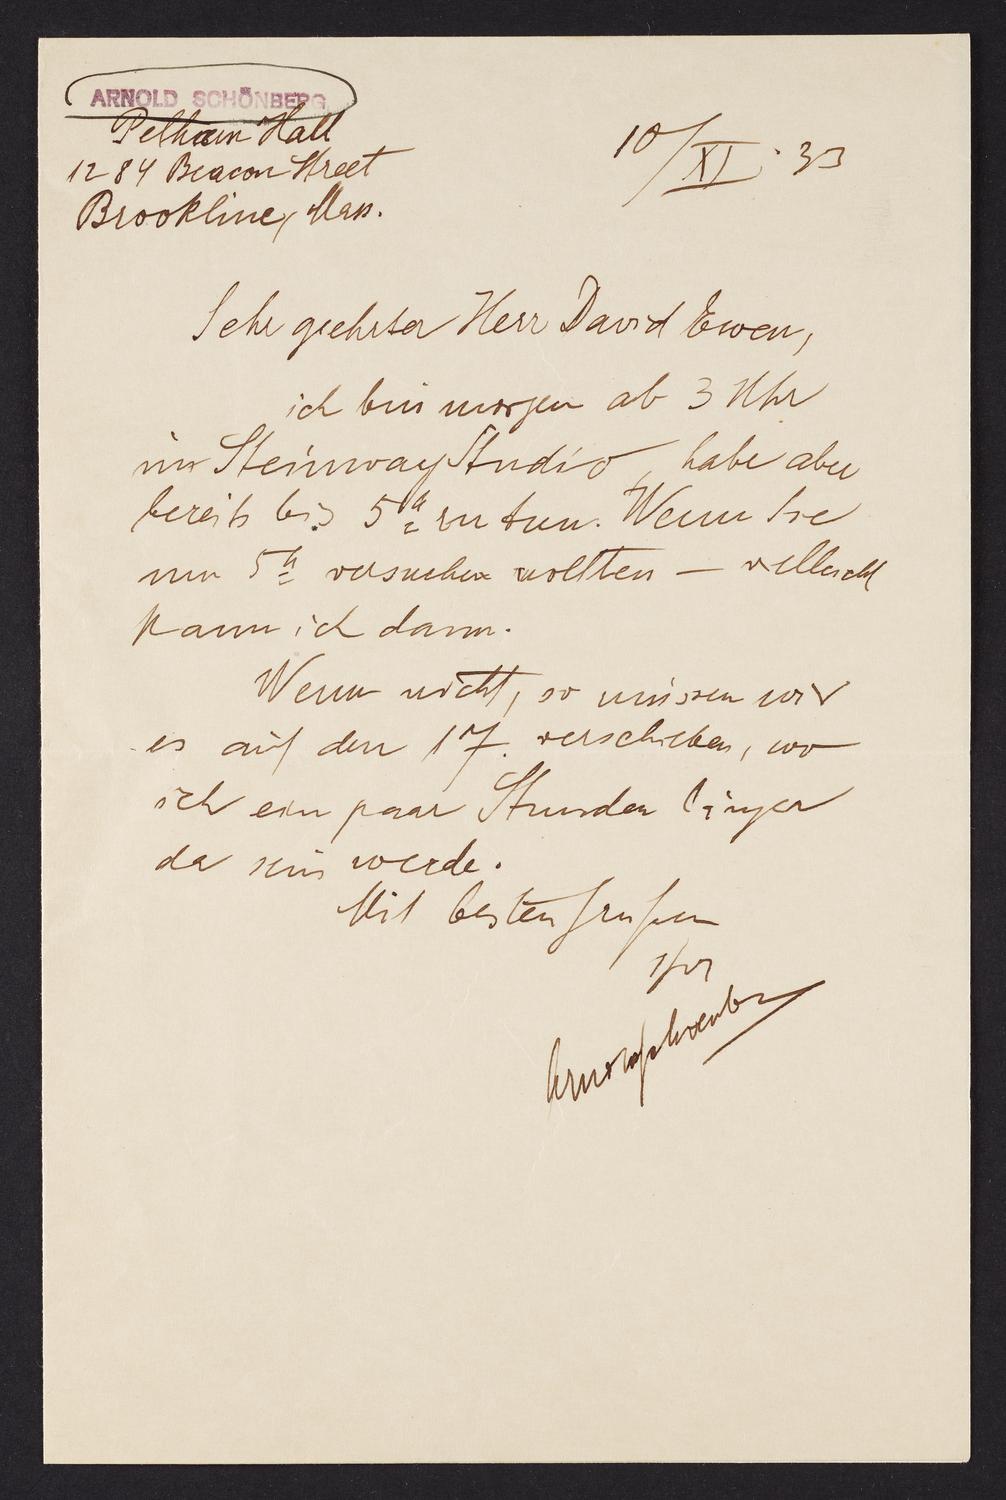 Correspondence from Arnold Schoenberg to David Ewen